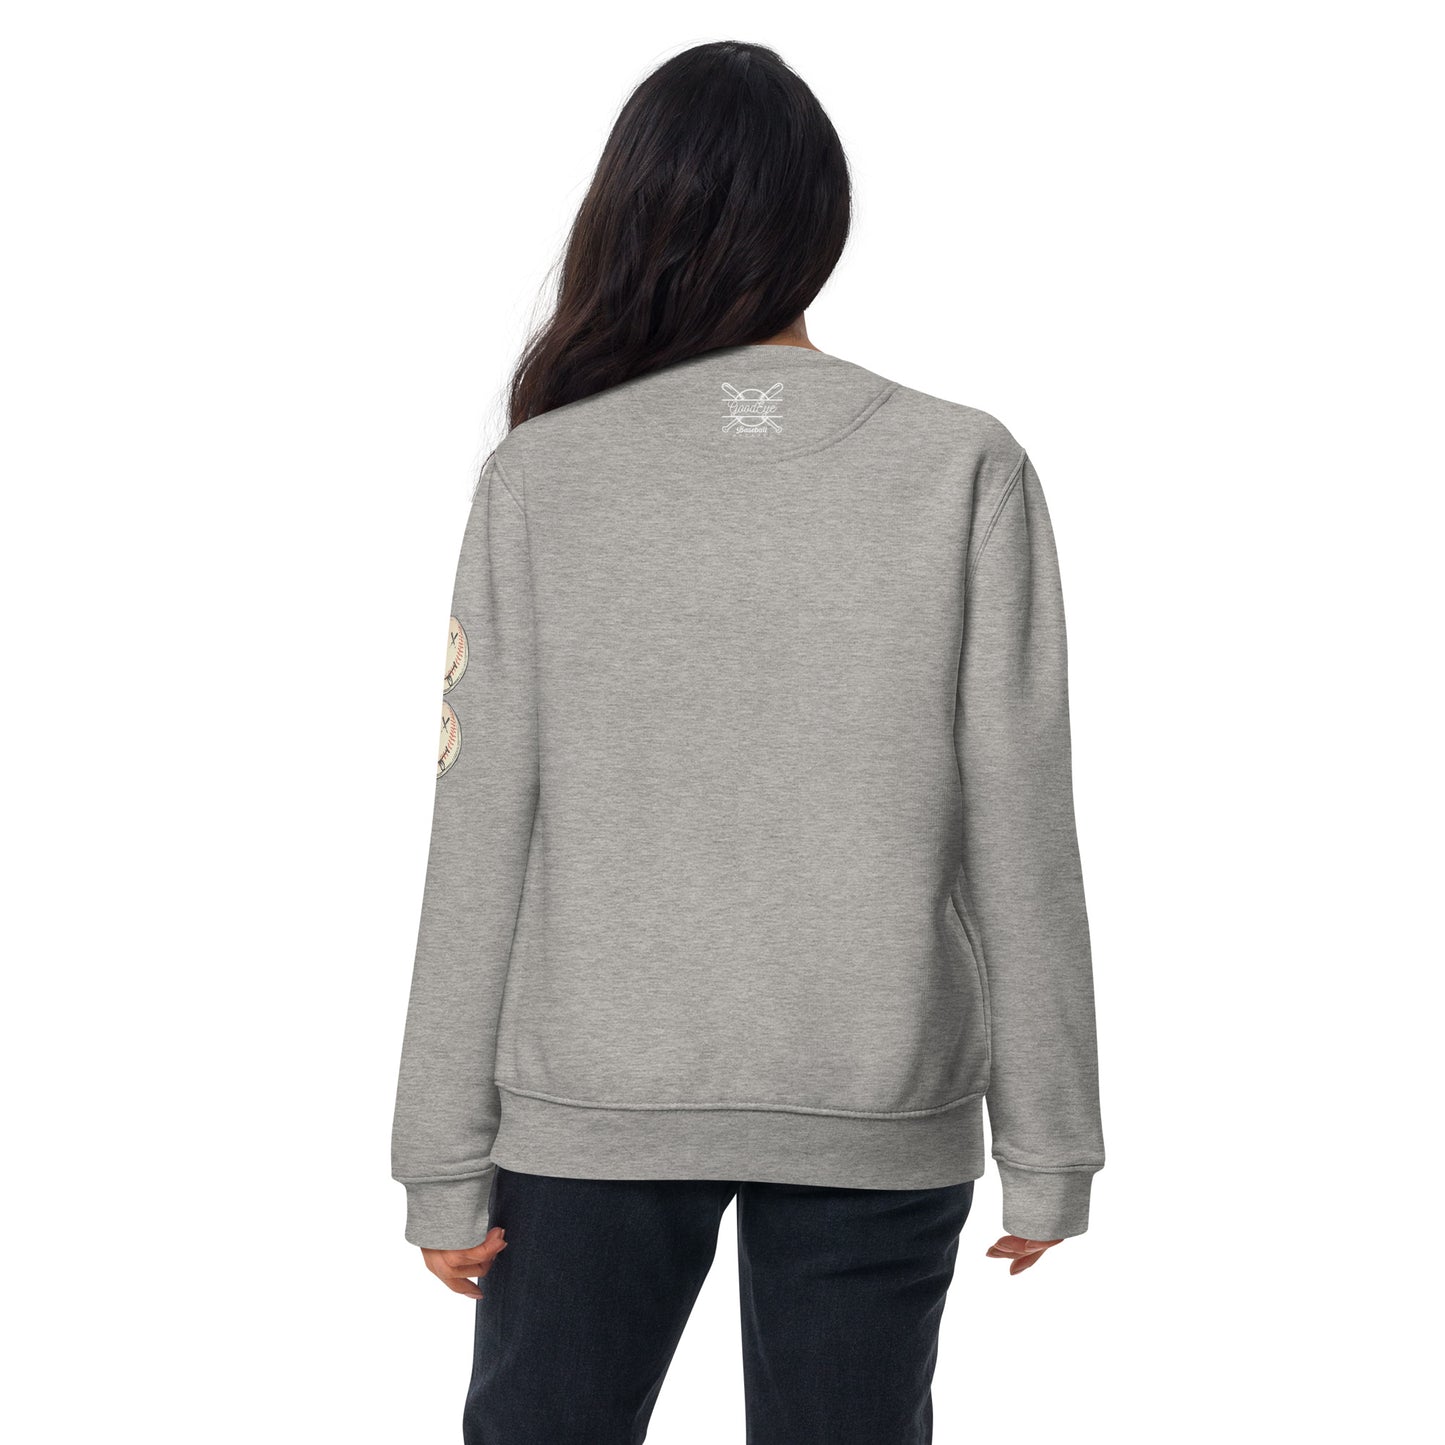 Unisex "Sorry" Premium Sweatshirt